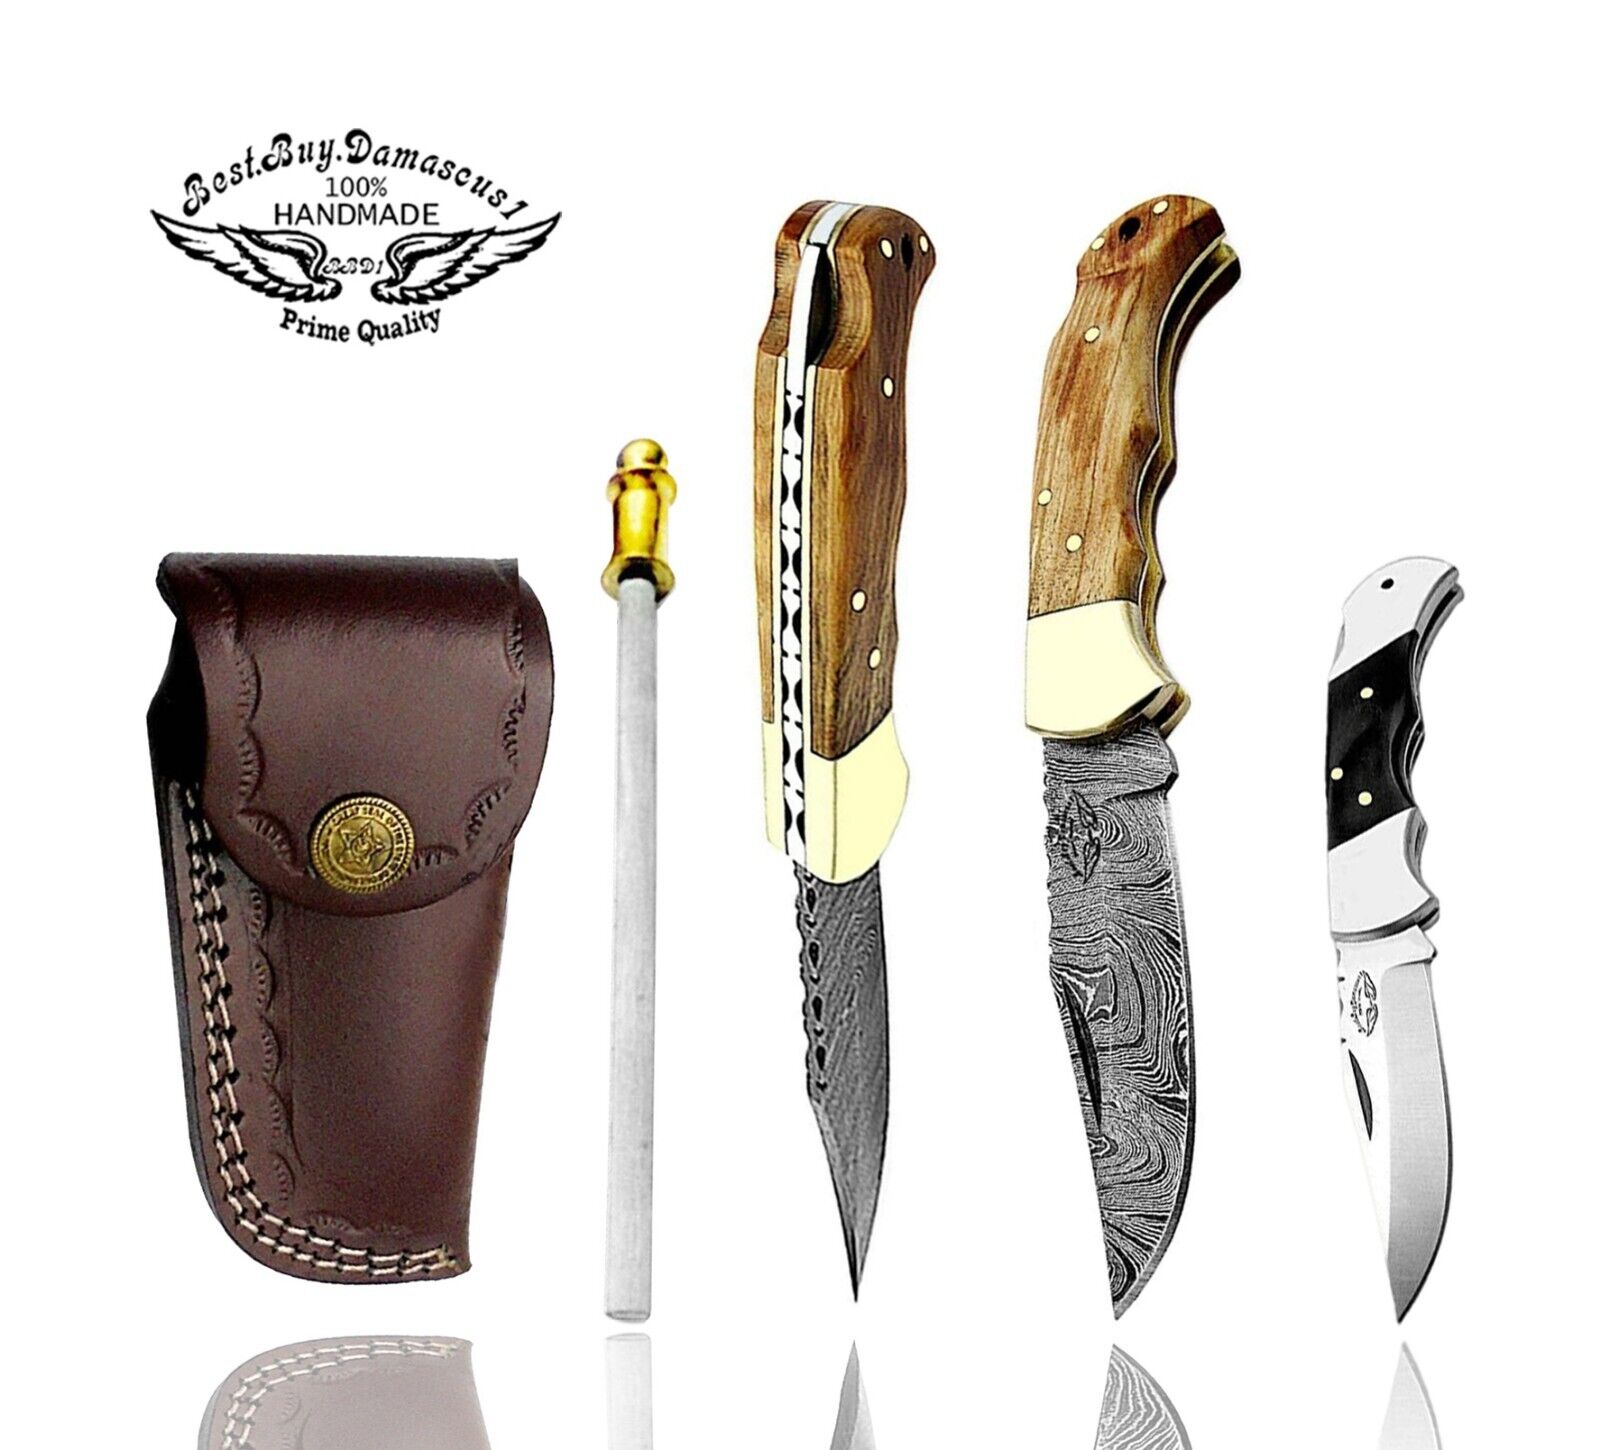 Best.Buy.Damascus1 Pocket Knife Damascus Knife Set Hunting Folding Pocket Knives